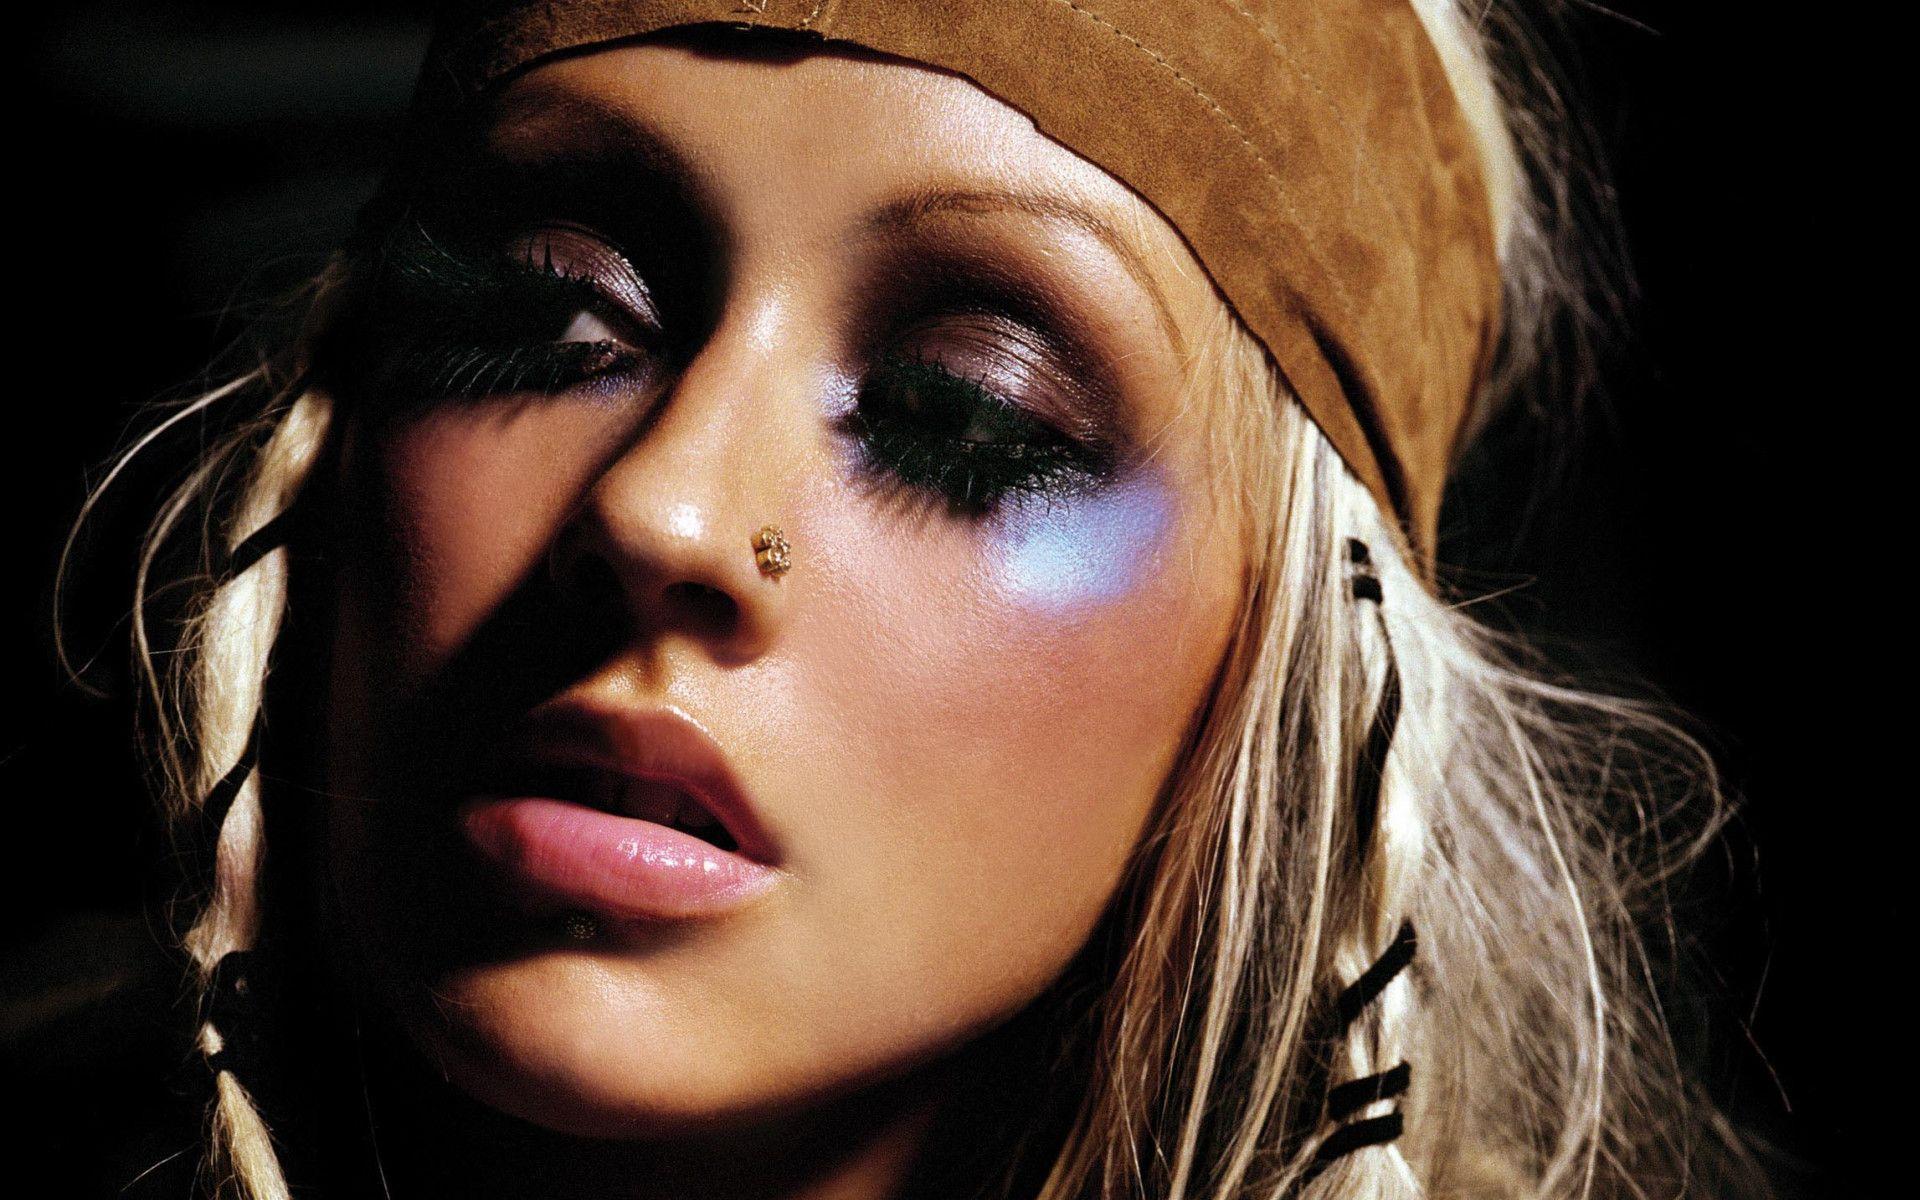 AmazingPict.com. Christina Aguilera Wallpaper 2014